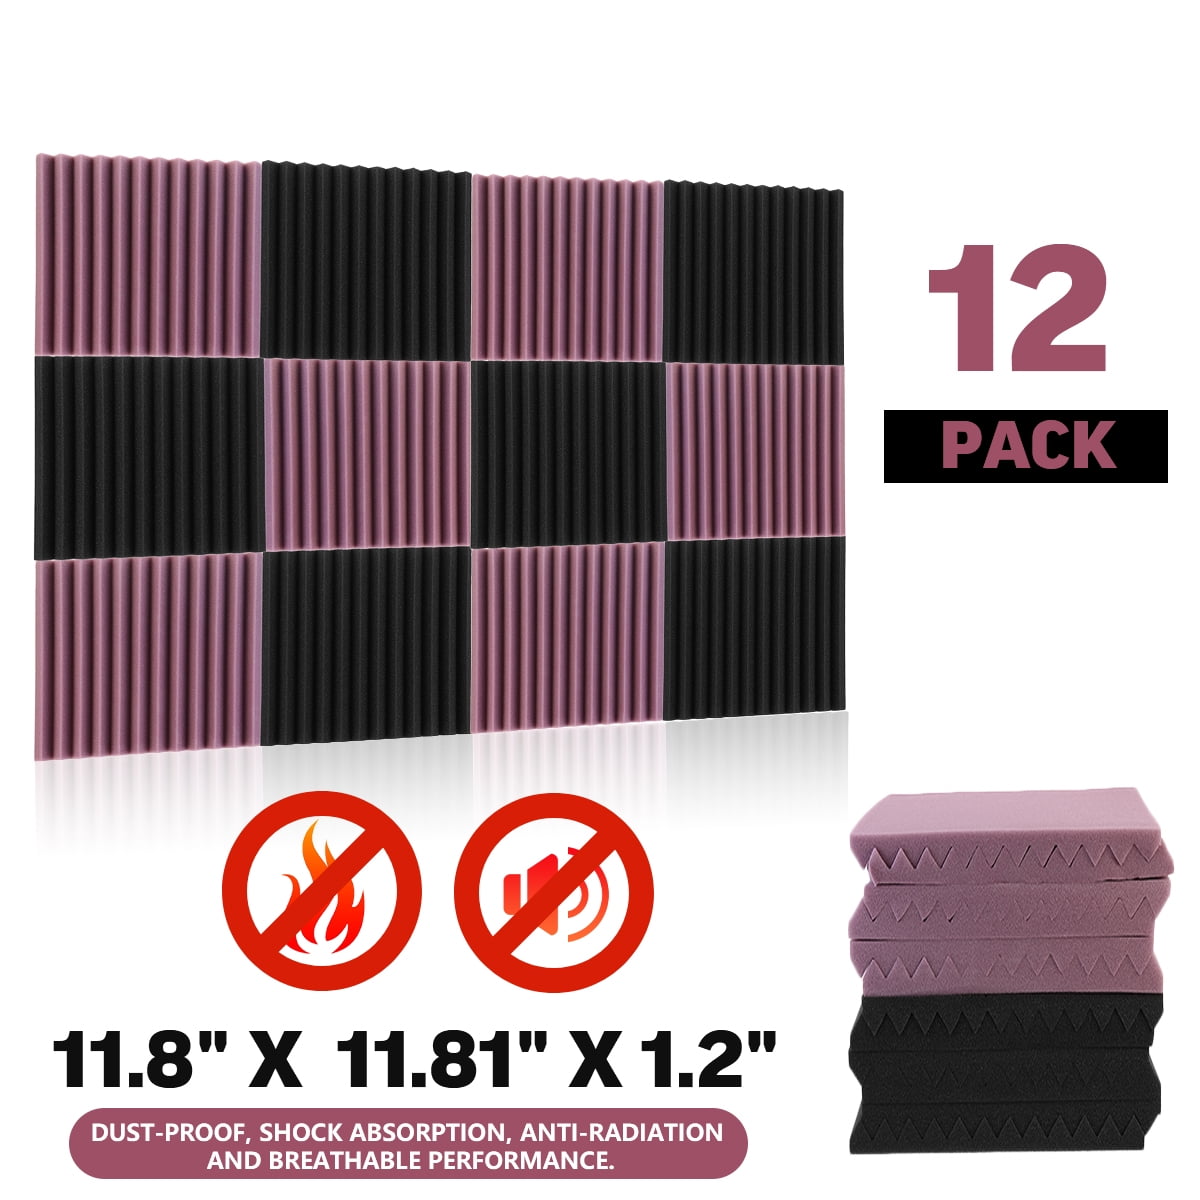 Blue/Charcoal Pro Studio Acoustics 12 Pack 12x12x2 Acoustic Wedge Foam Absorption Soundproofing Tiles 